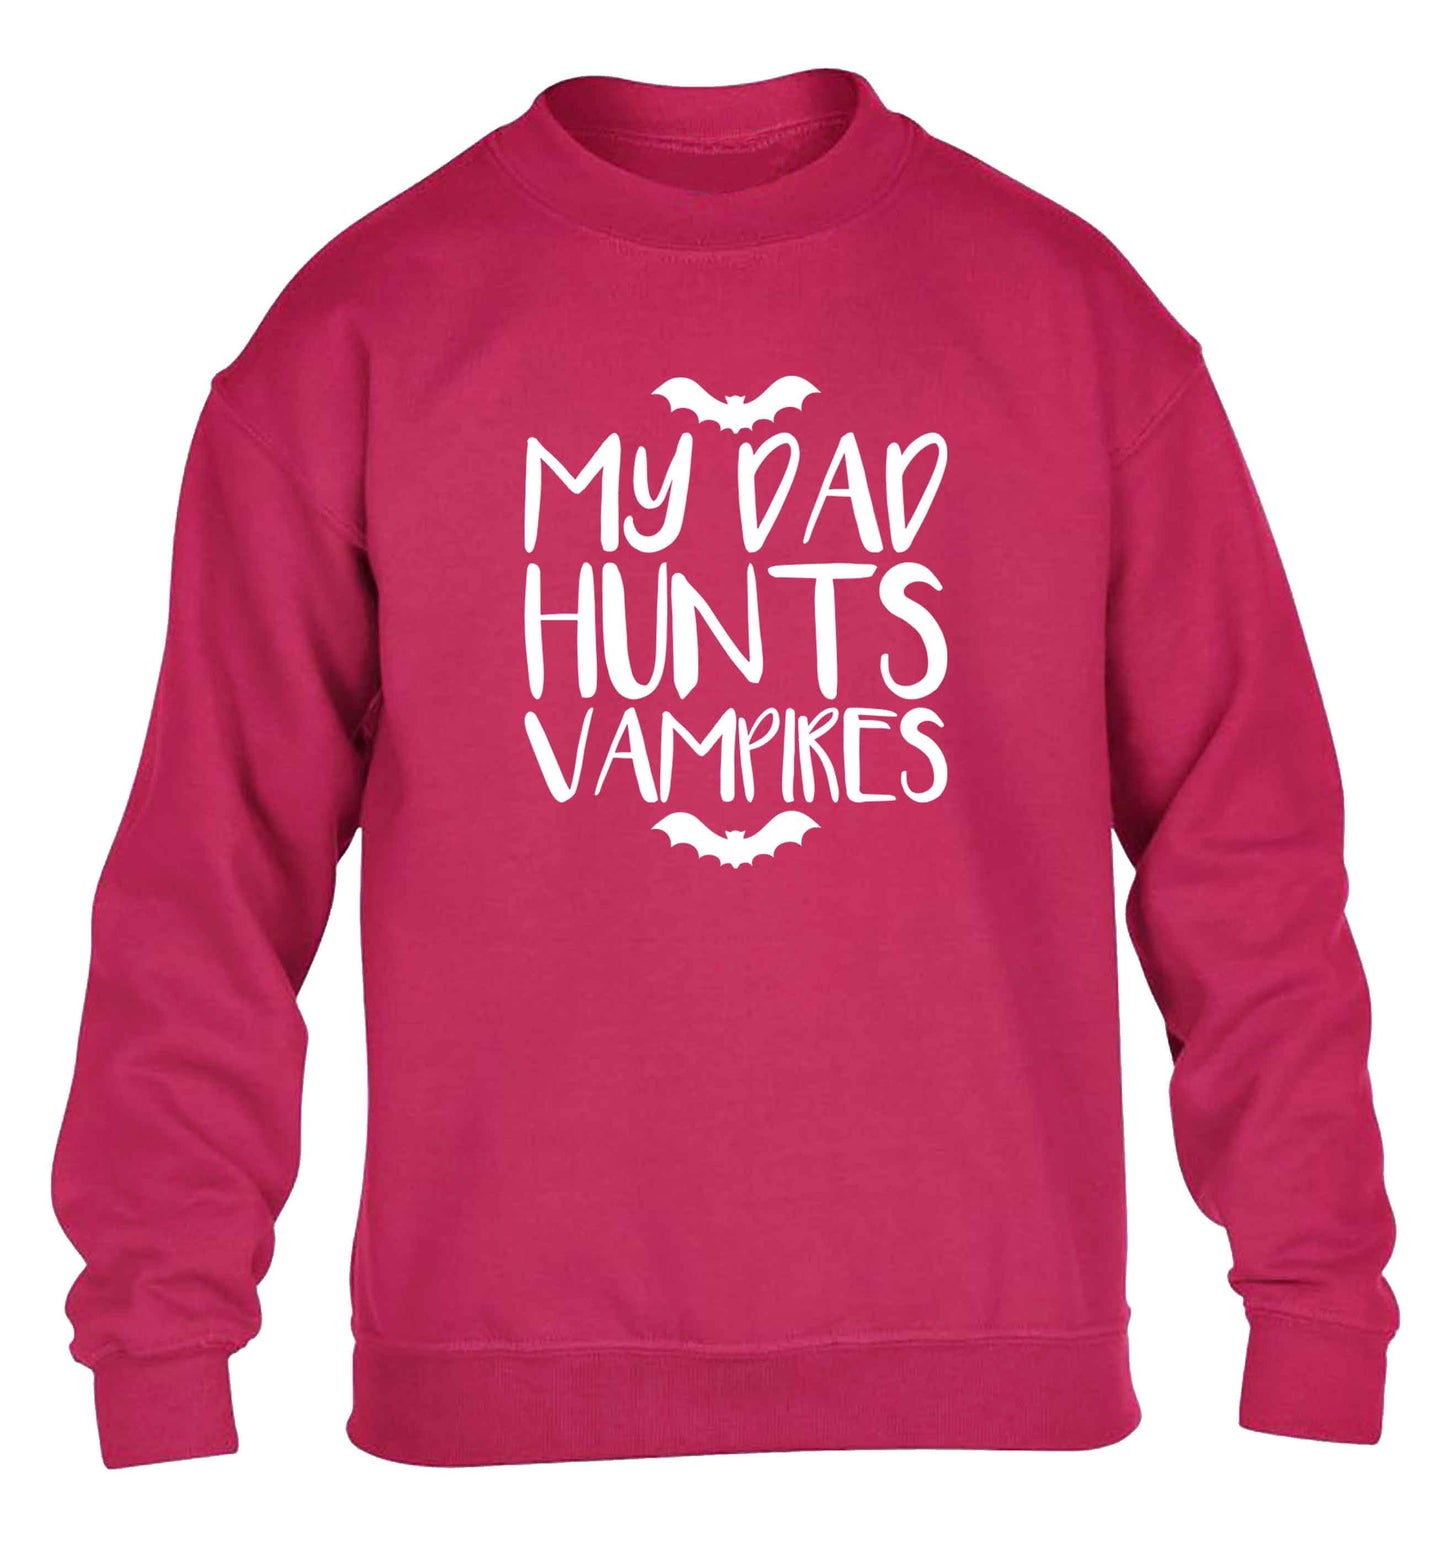 My dad hunts vampires children's pink sweater 12-13 Years